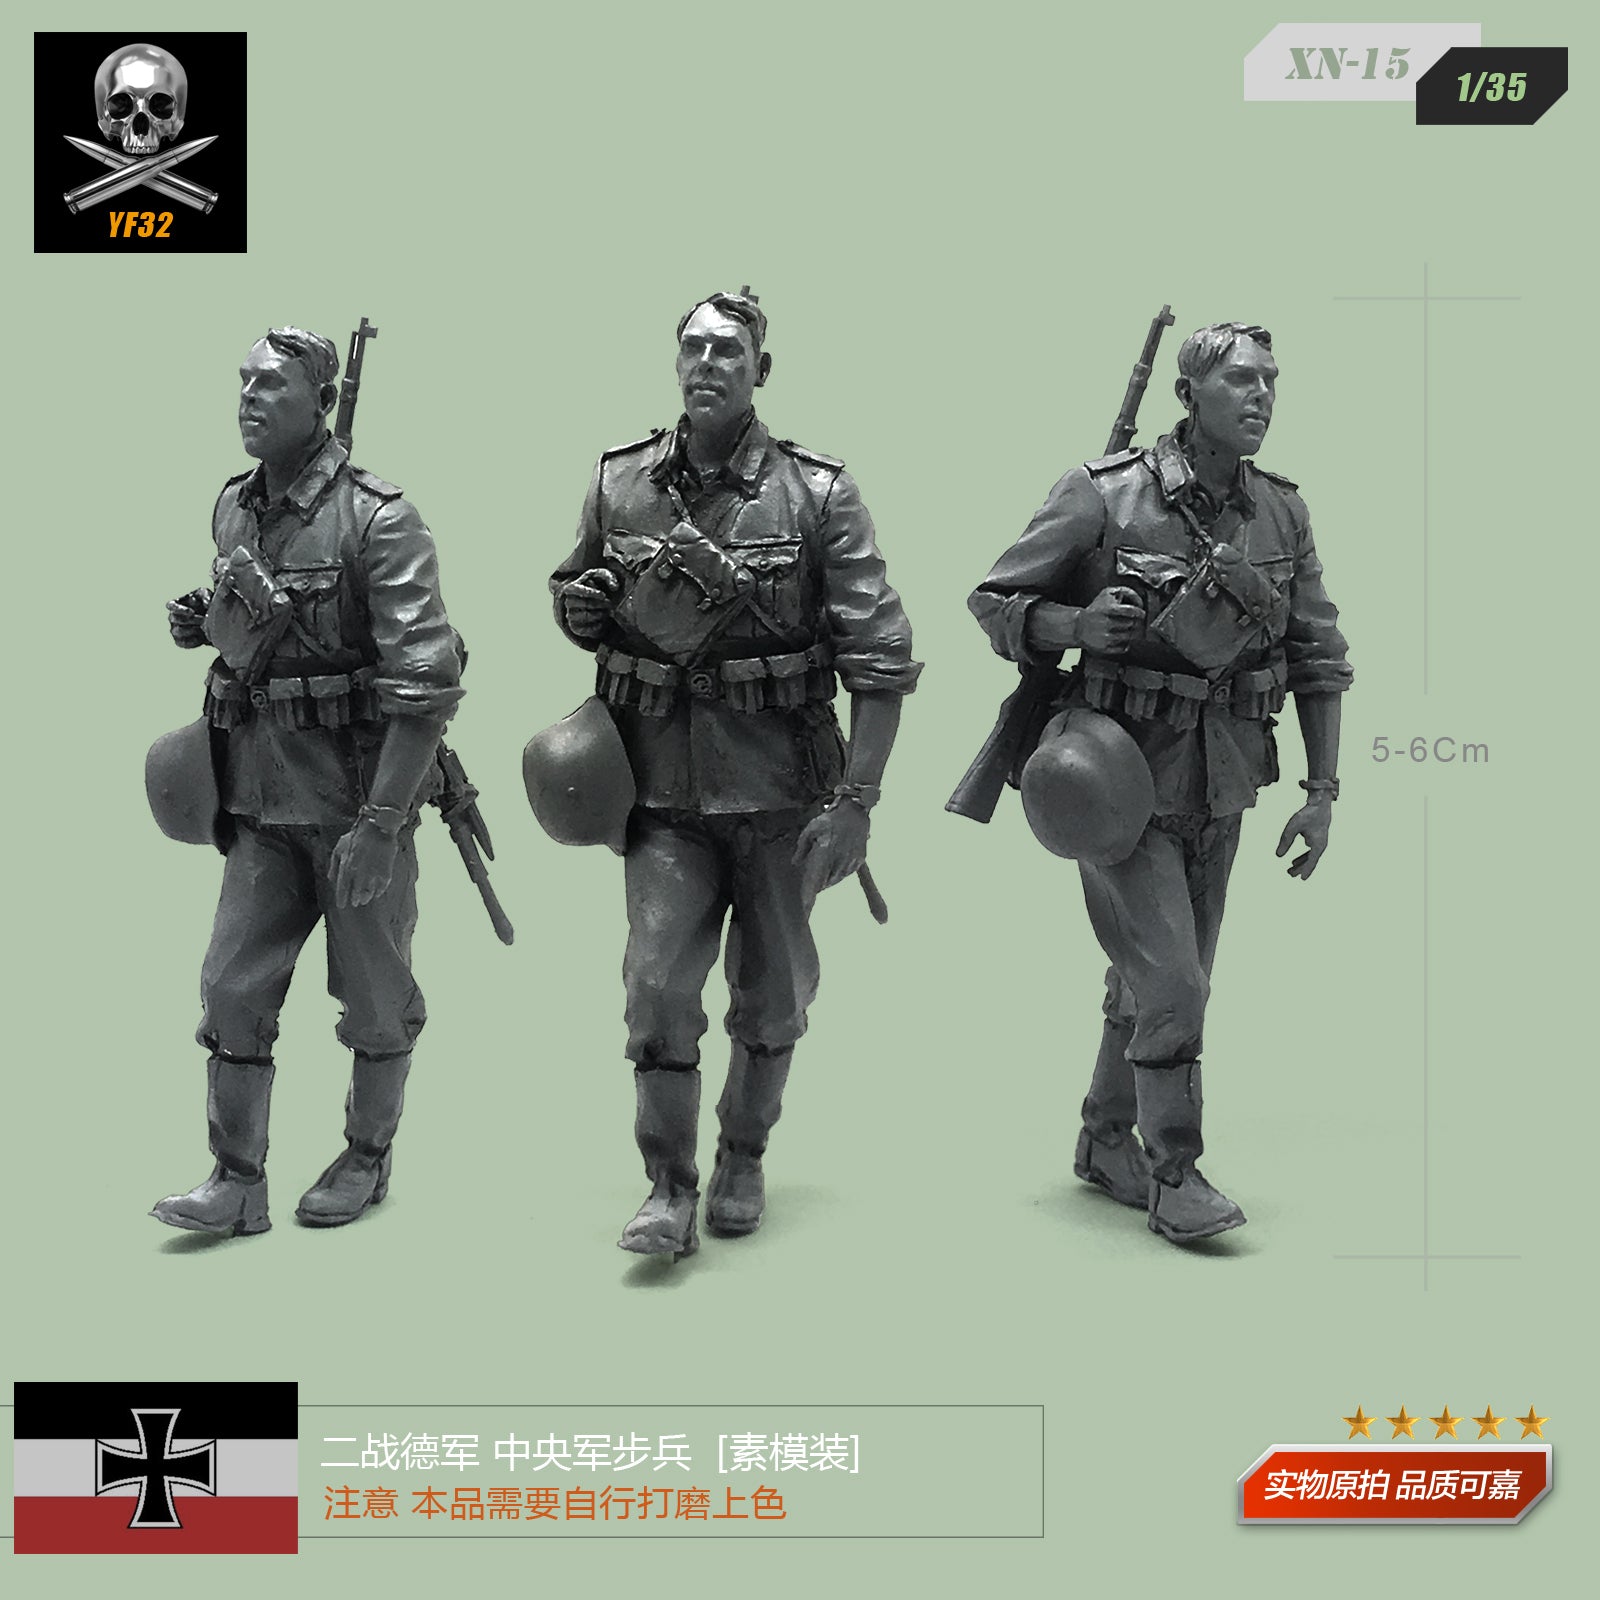 1/35 World War II German Army infantry resin soldiers soldiers element model XN-15